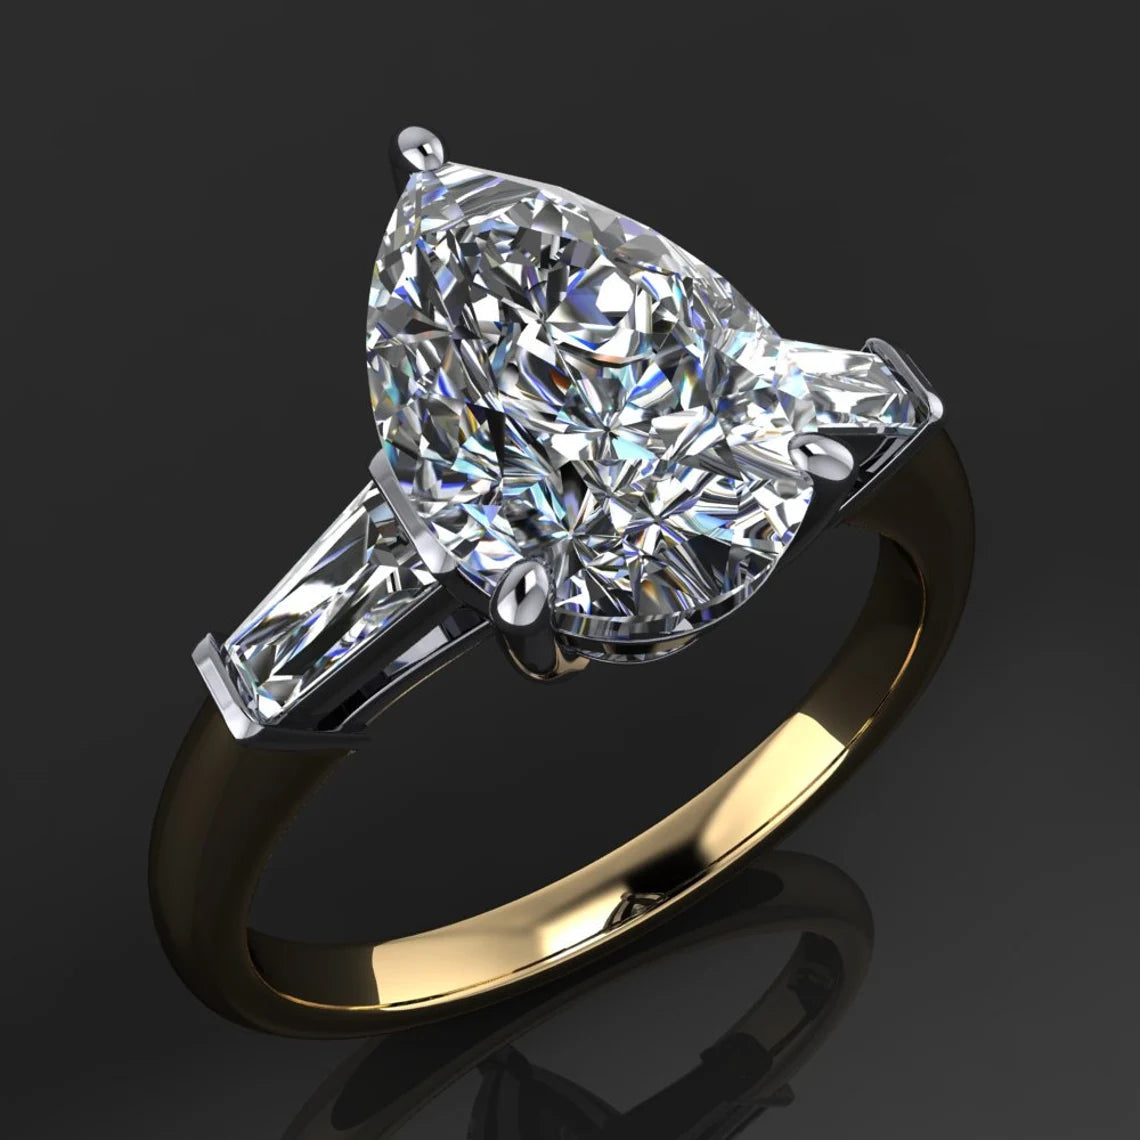 laurel ring – 3.5 carat pear cut moissanite engagement ring, NEO moissanite - J Hollywood Designs